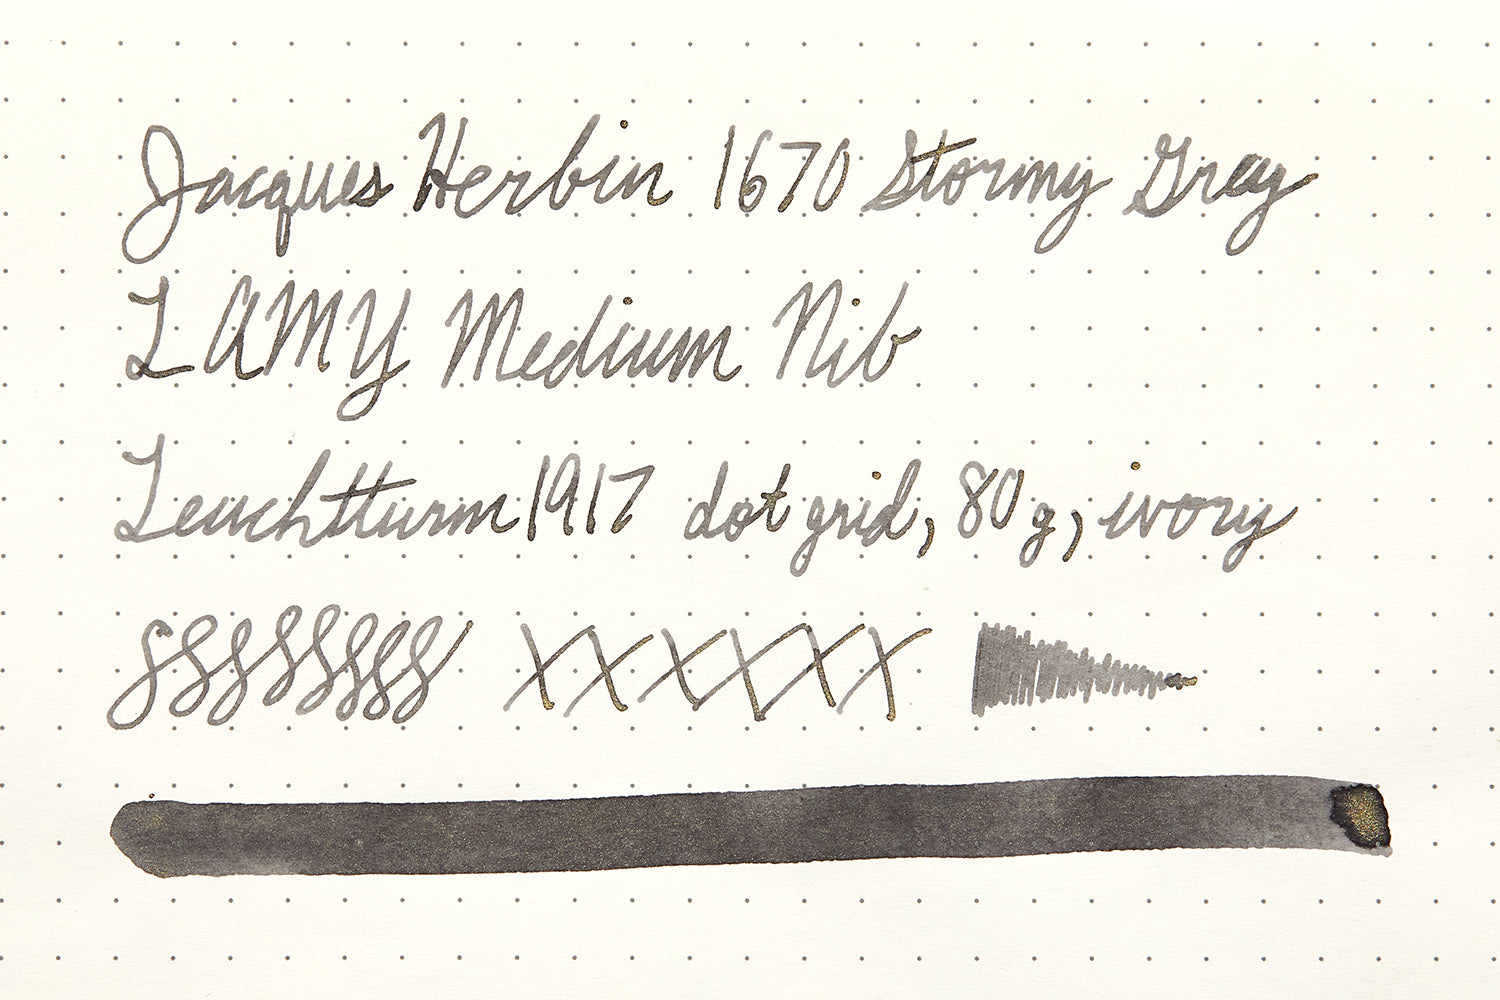 Jacques Herbin 1670 Stormy Grey Writing Test on Leuchtturm1917